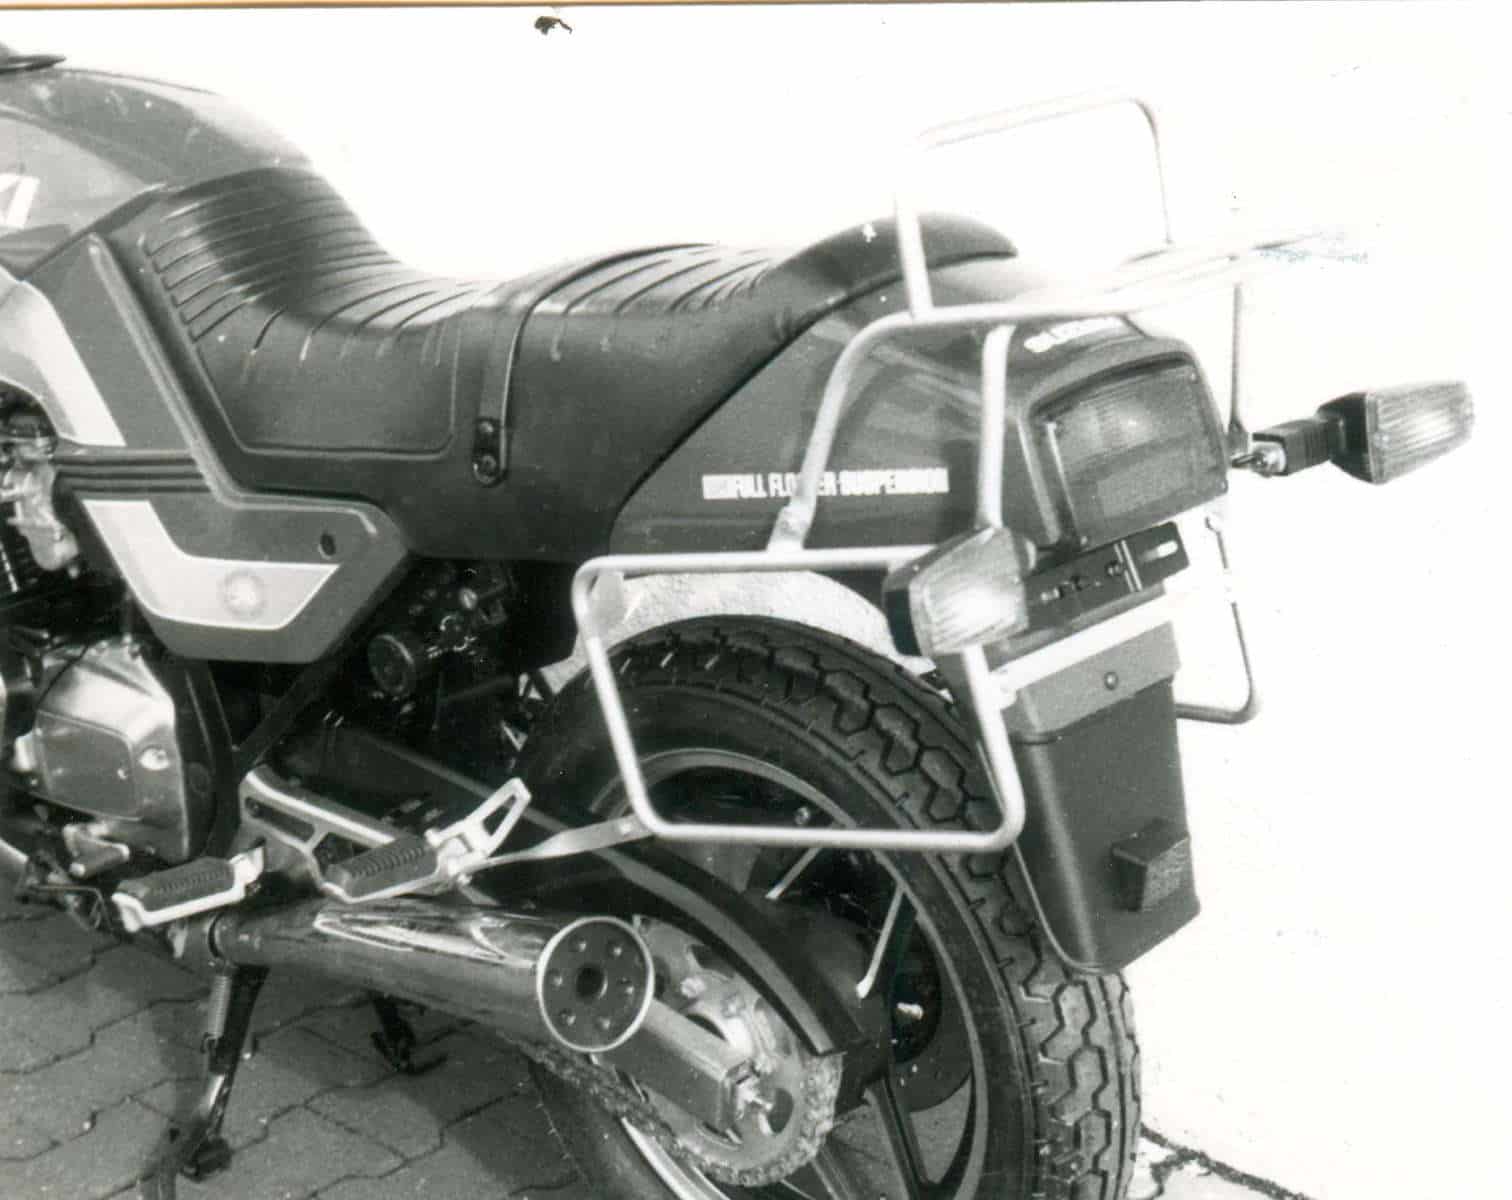 Sidecarrier permanent mounted black for Suzuki GSX 600 F (1998-2002)